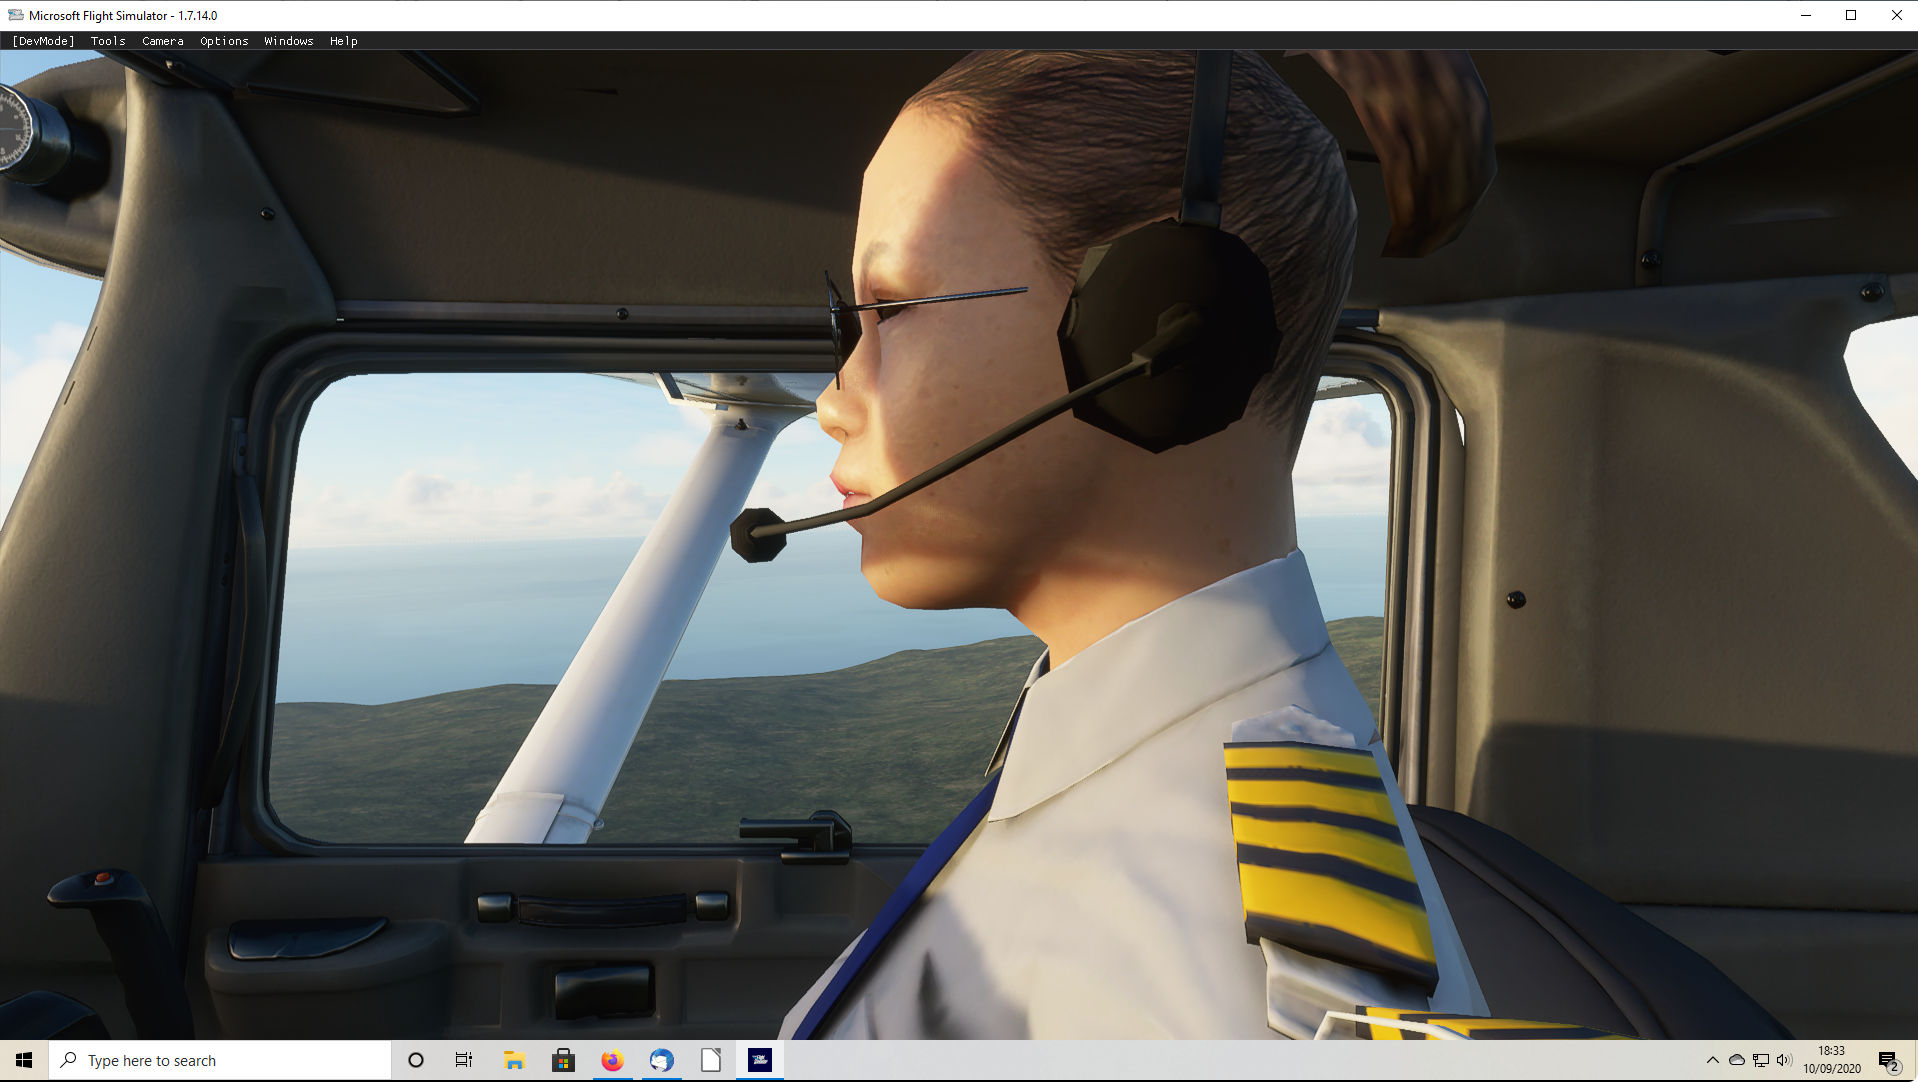 Microsoft Flight Simulator 2020 - What Pilots Need to Know